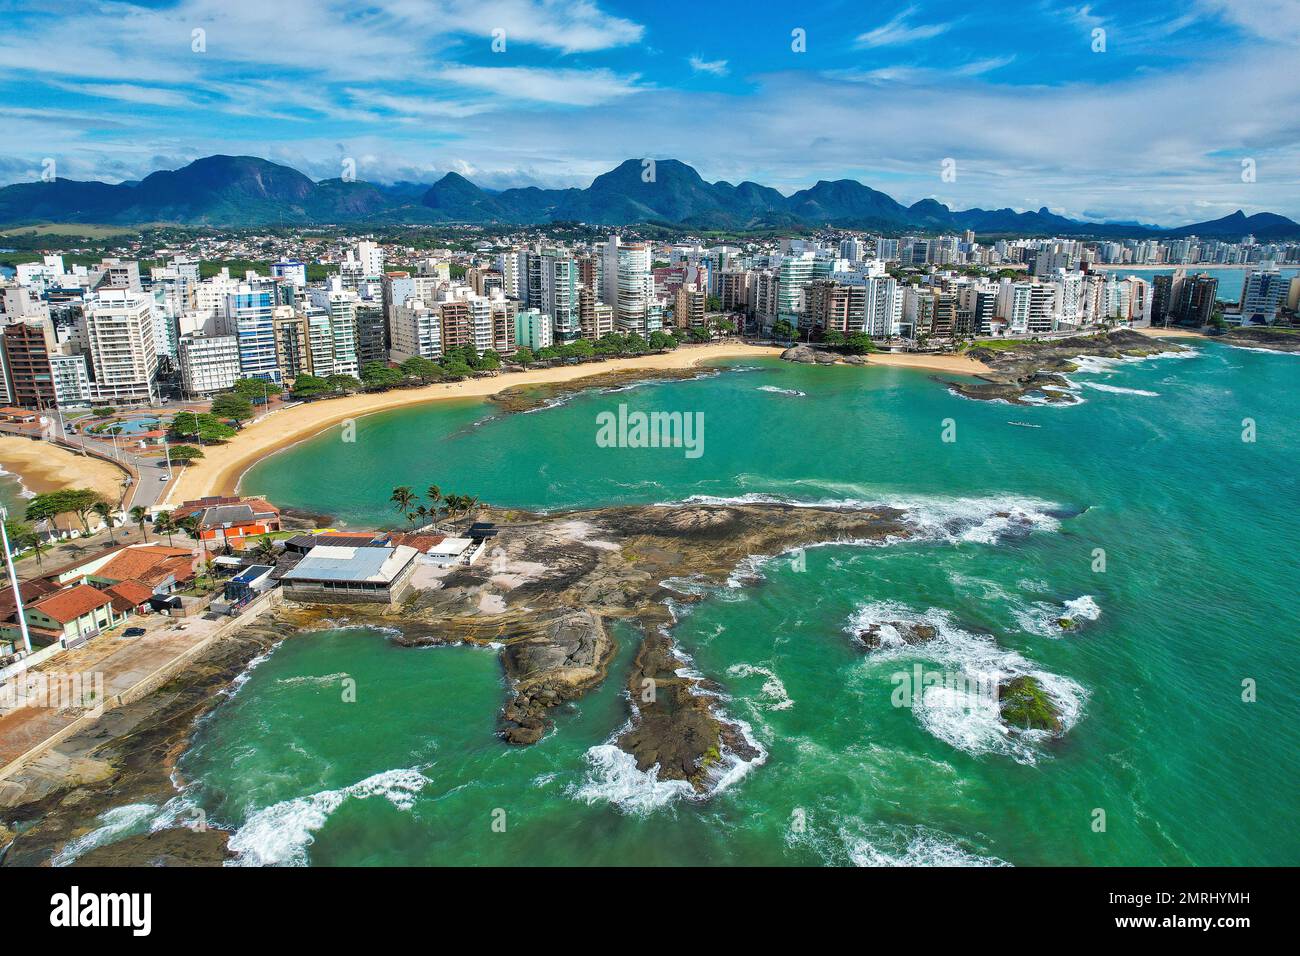 An aerial of the Areia Preta beach in Guarapari town In Brazil with alongside the blue calm ocean Stock Photo